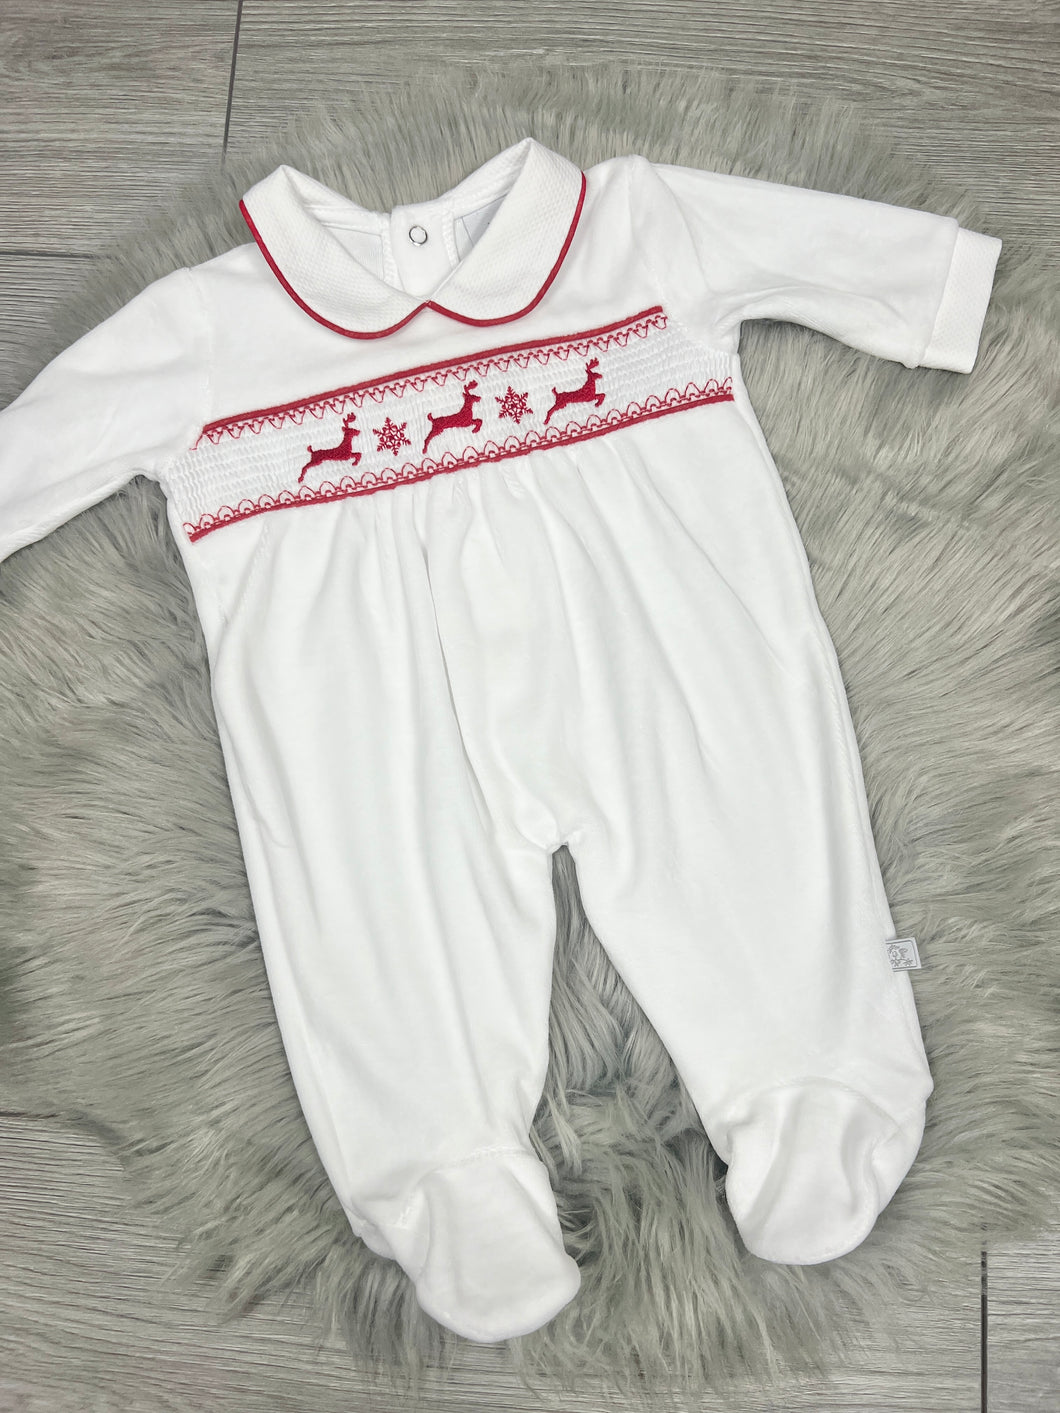 Children's/Baby Leaping Reindeer Velour Sleepsuit White/Red